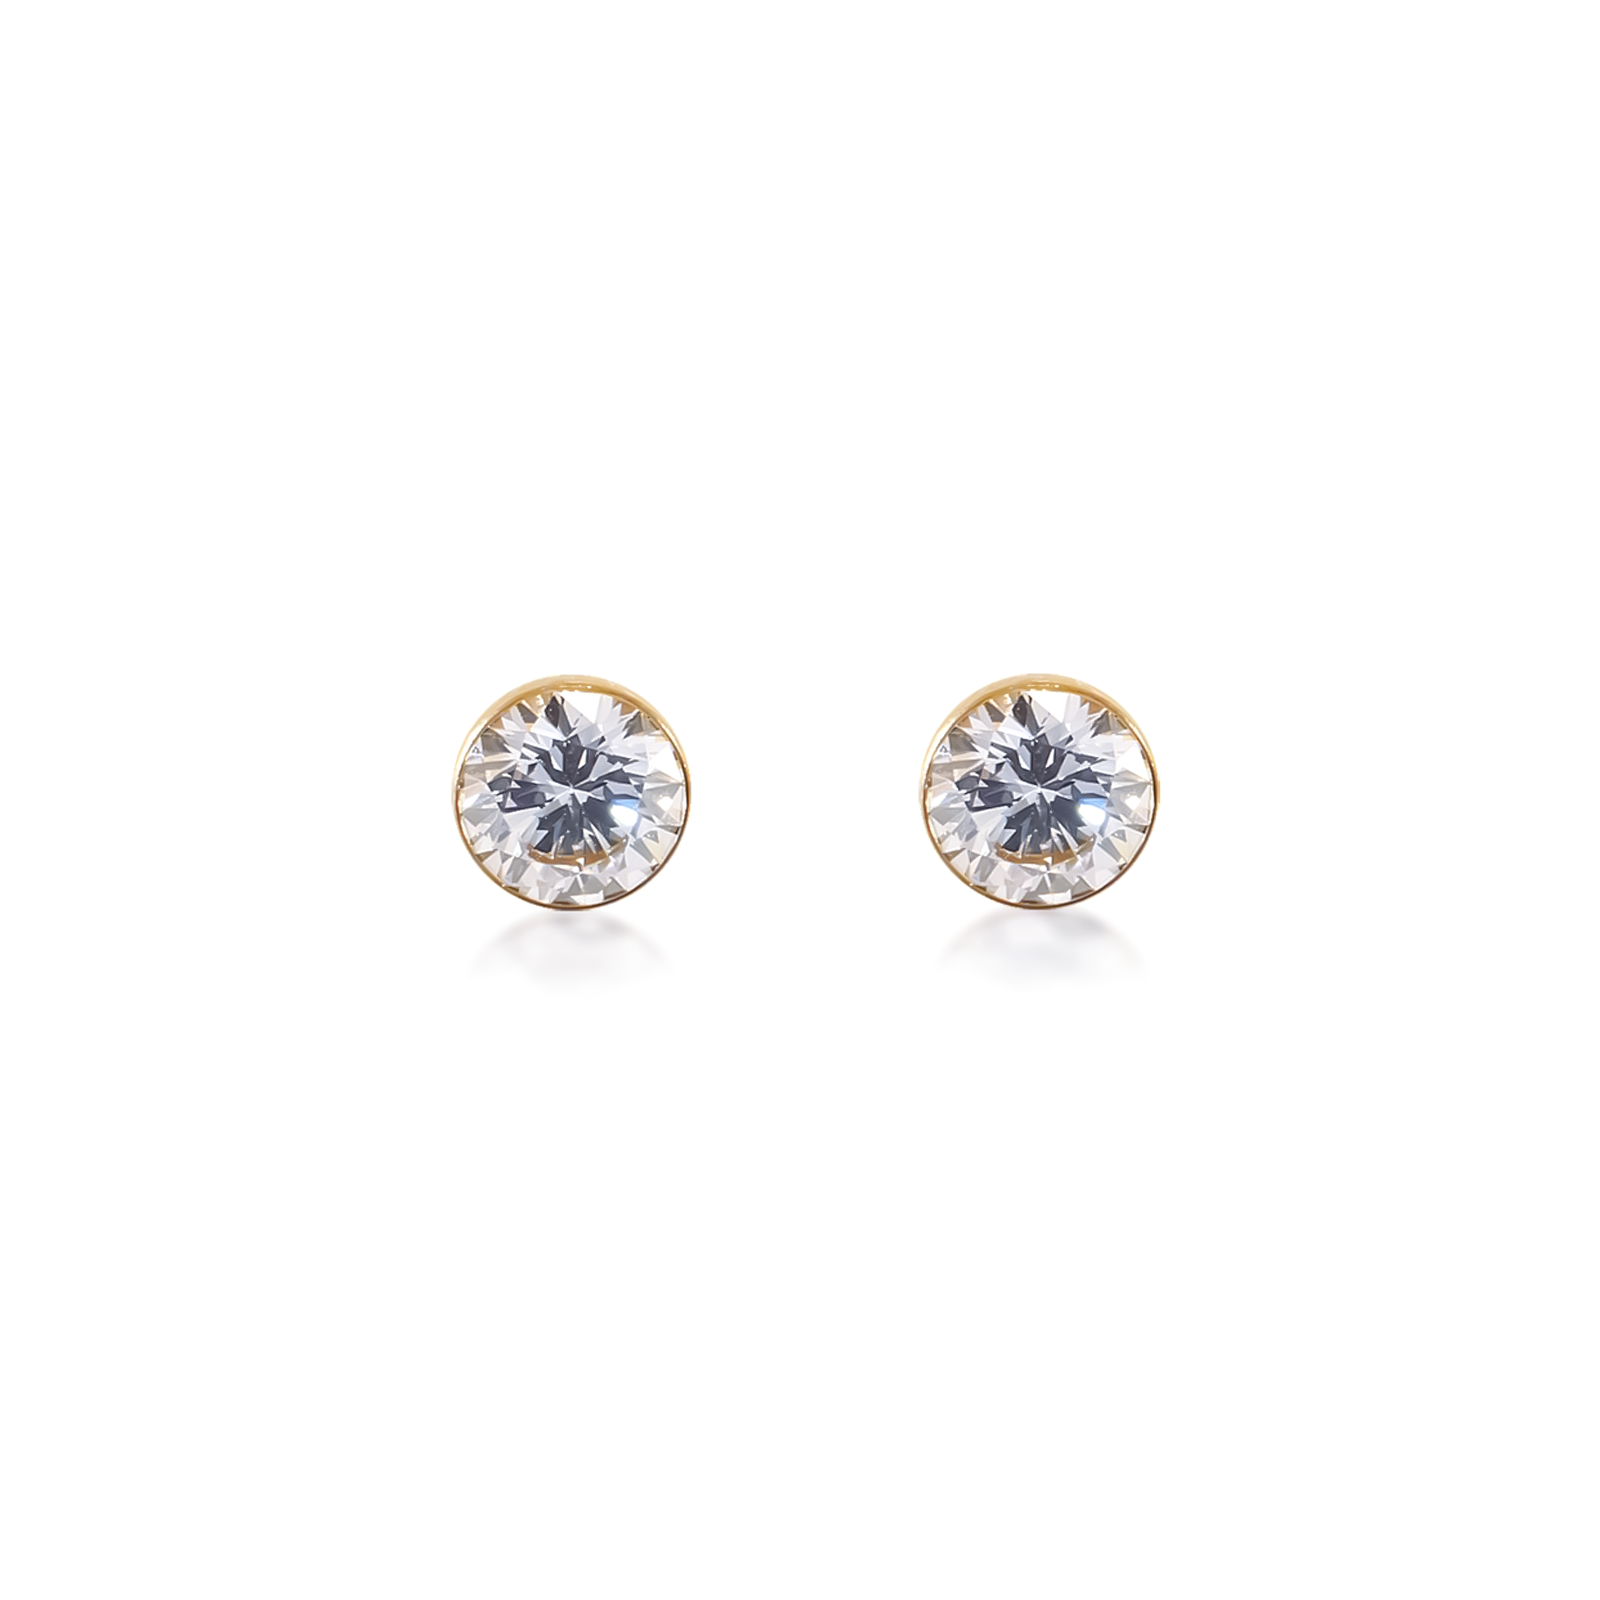 Buy CEYLONMINE- IGI american diamond stone stud earrings for women & girls  natural & original stone diamond stud earrings for astrological purpose at  Amazon.in